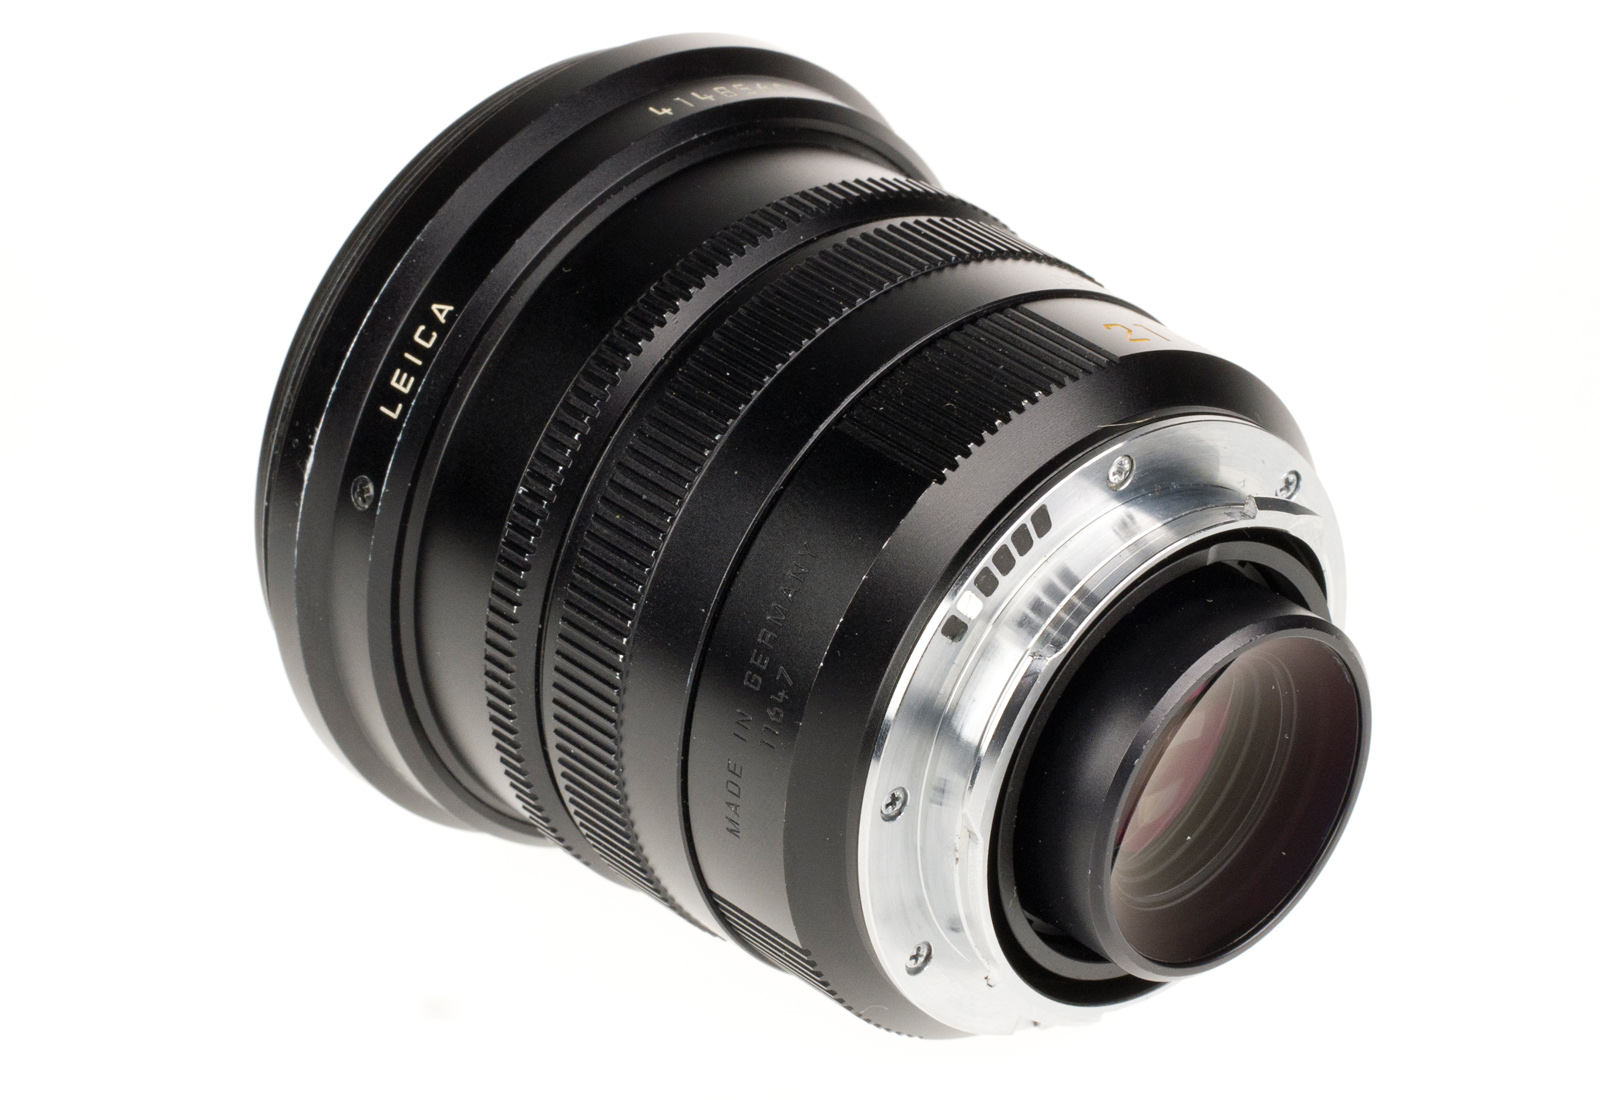 Leica Summilux-M 1:1,4/21mm ASPH. schwarz 11647